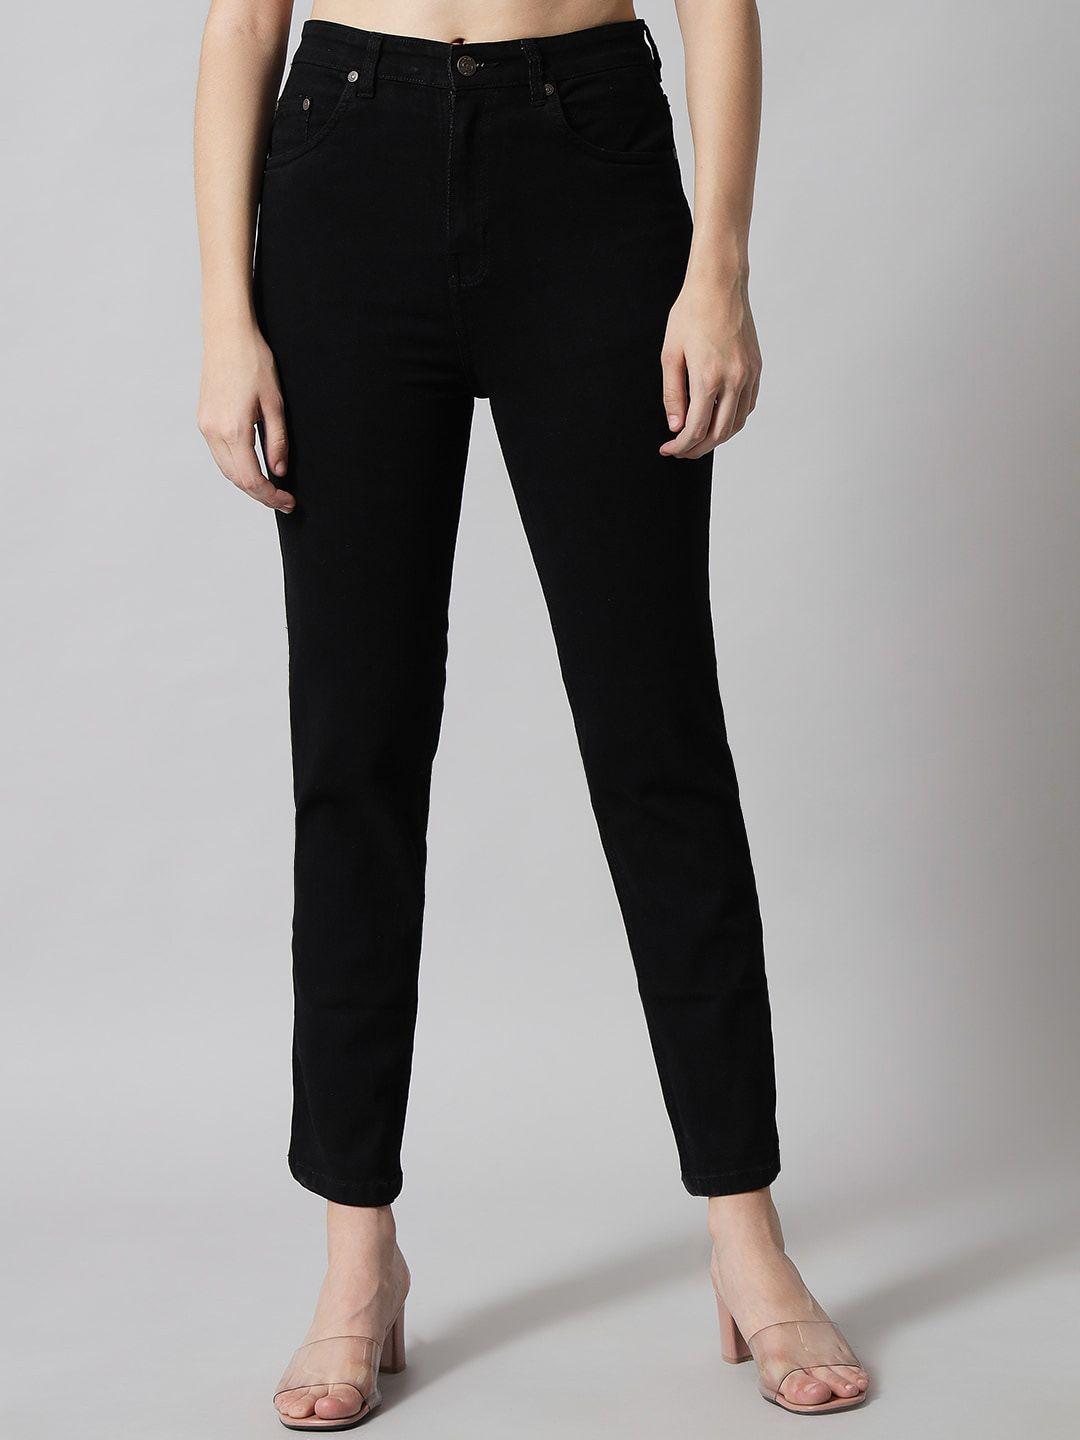 guti-women-slim-fit-high-rise-stretchable-cotton-jeans